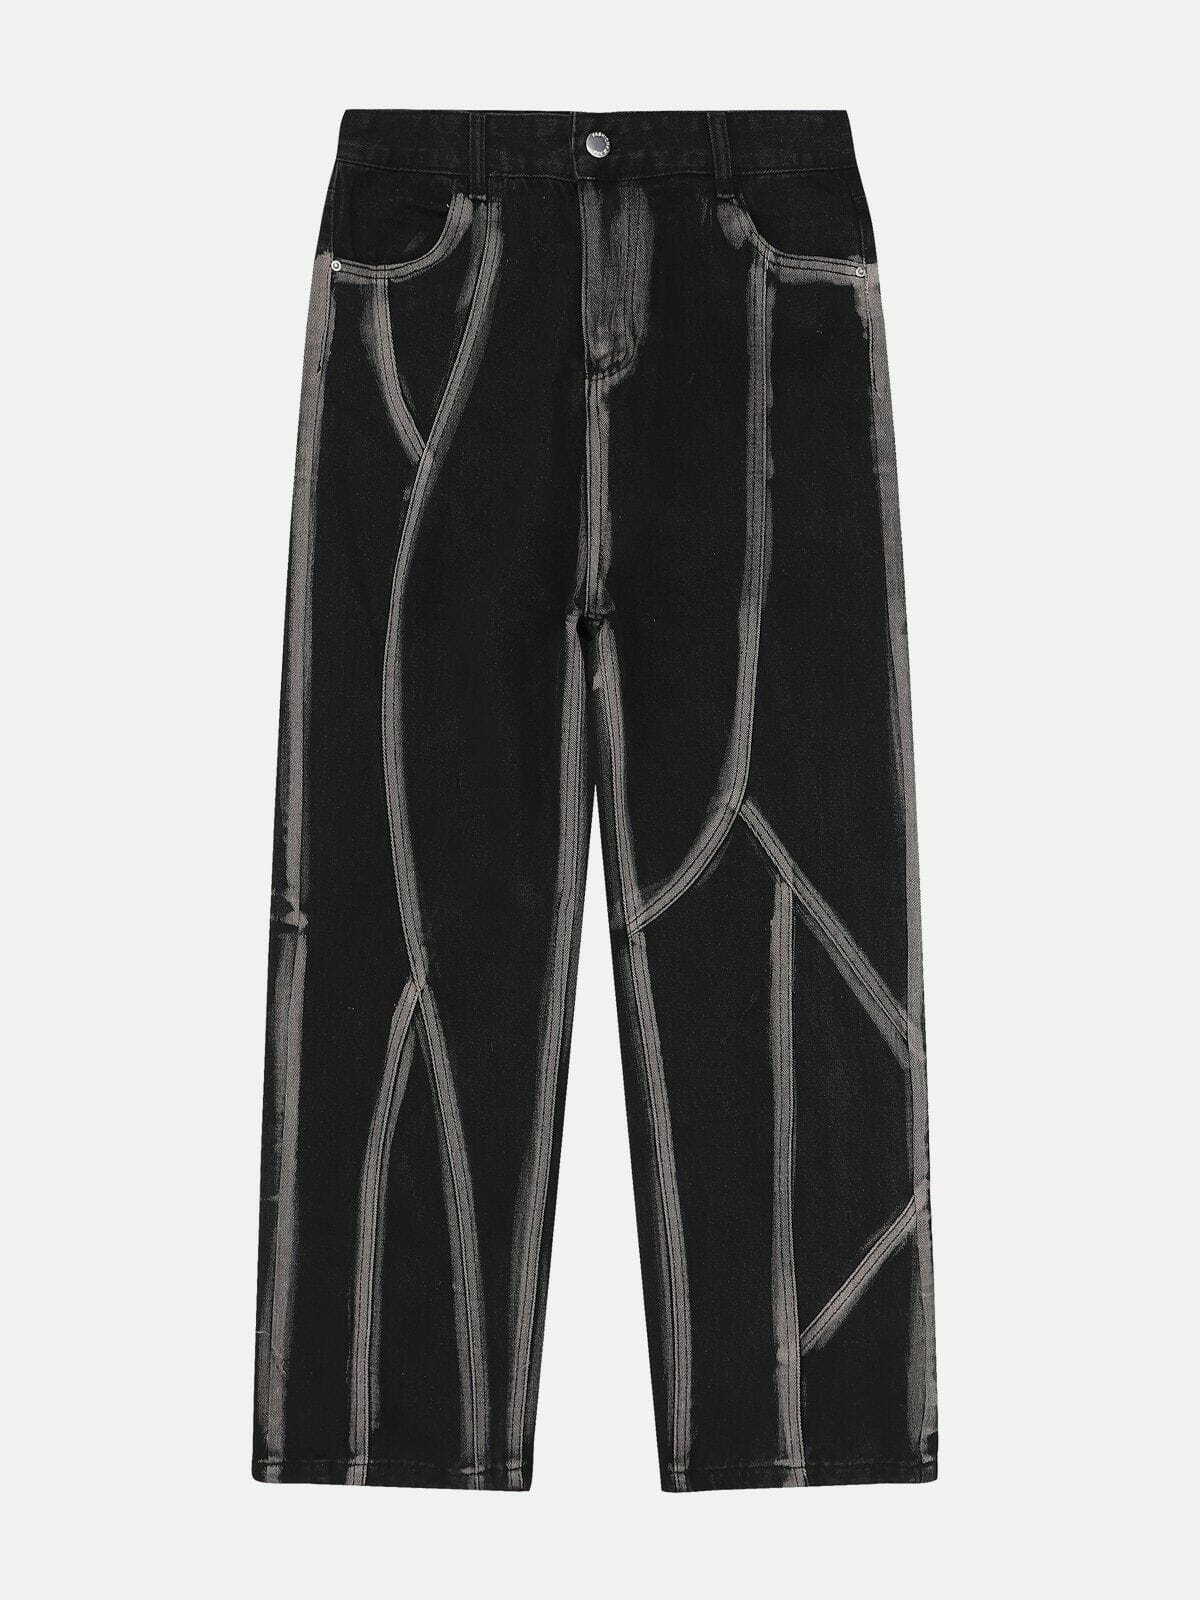 y2k urban line segment jeans sleek & edgy streetwear 6592